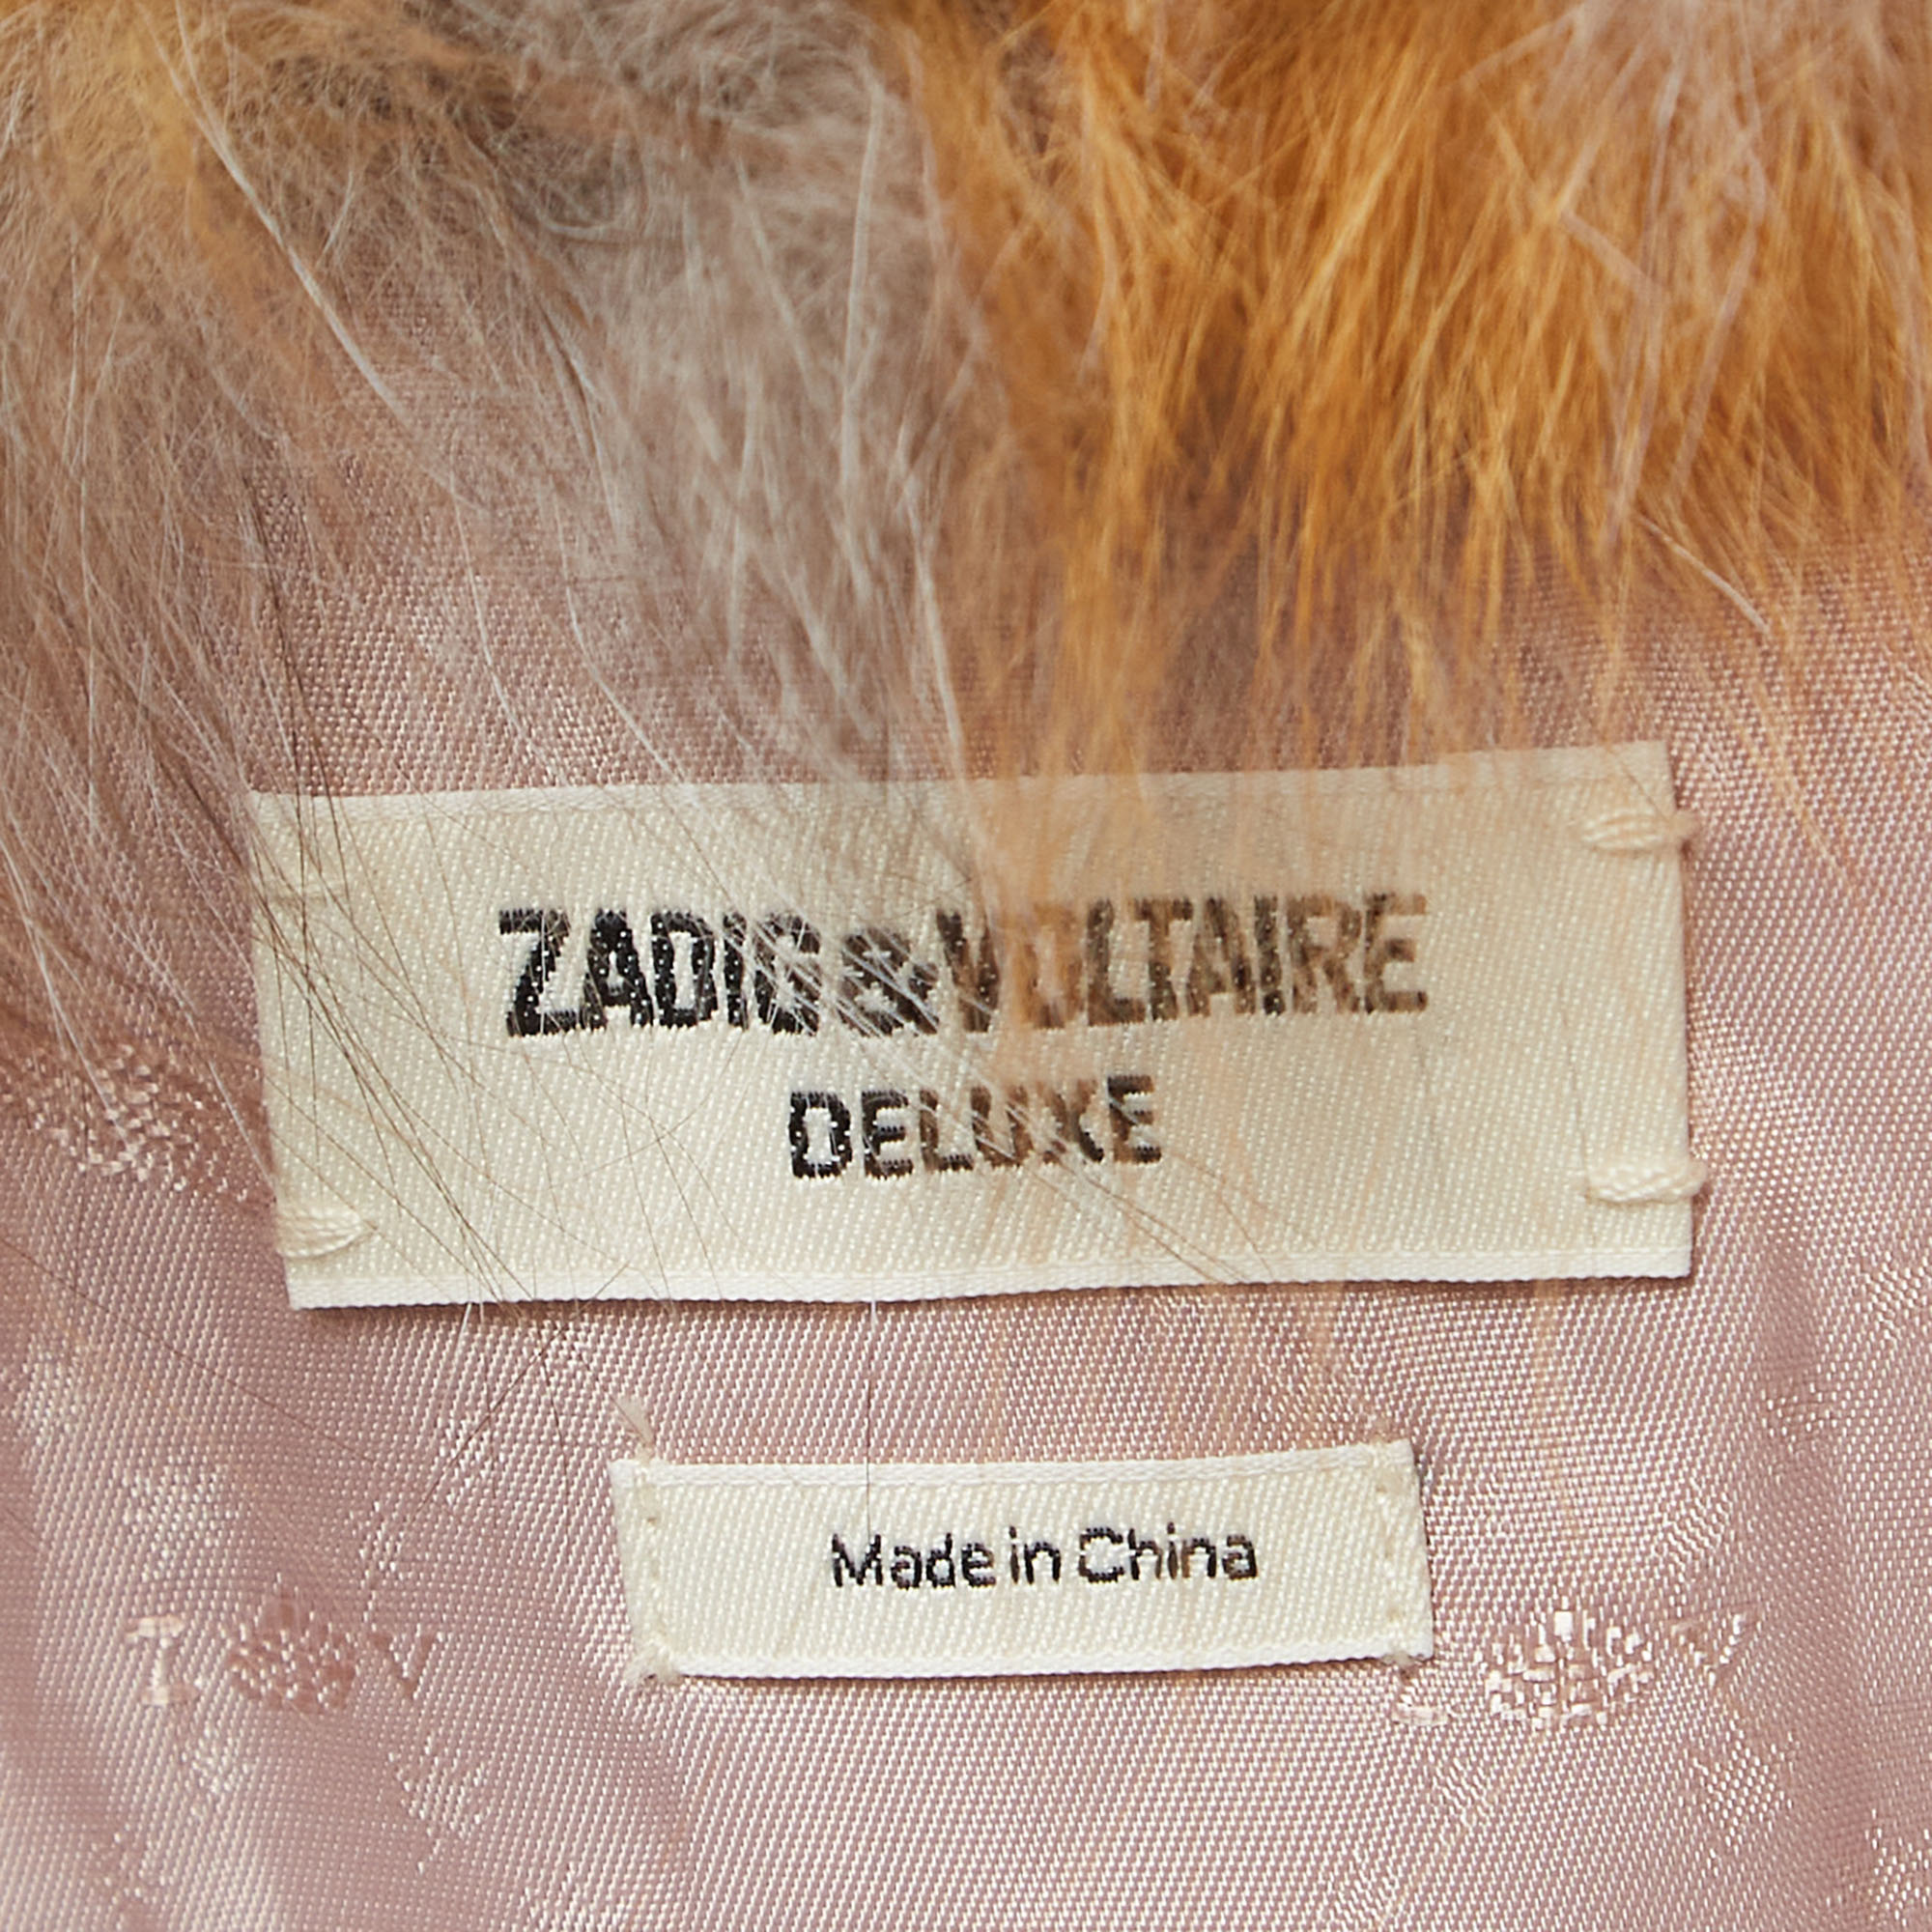 Zadig & Voltaire Deluxe Multicolor Fur Vest M